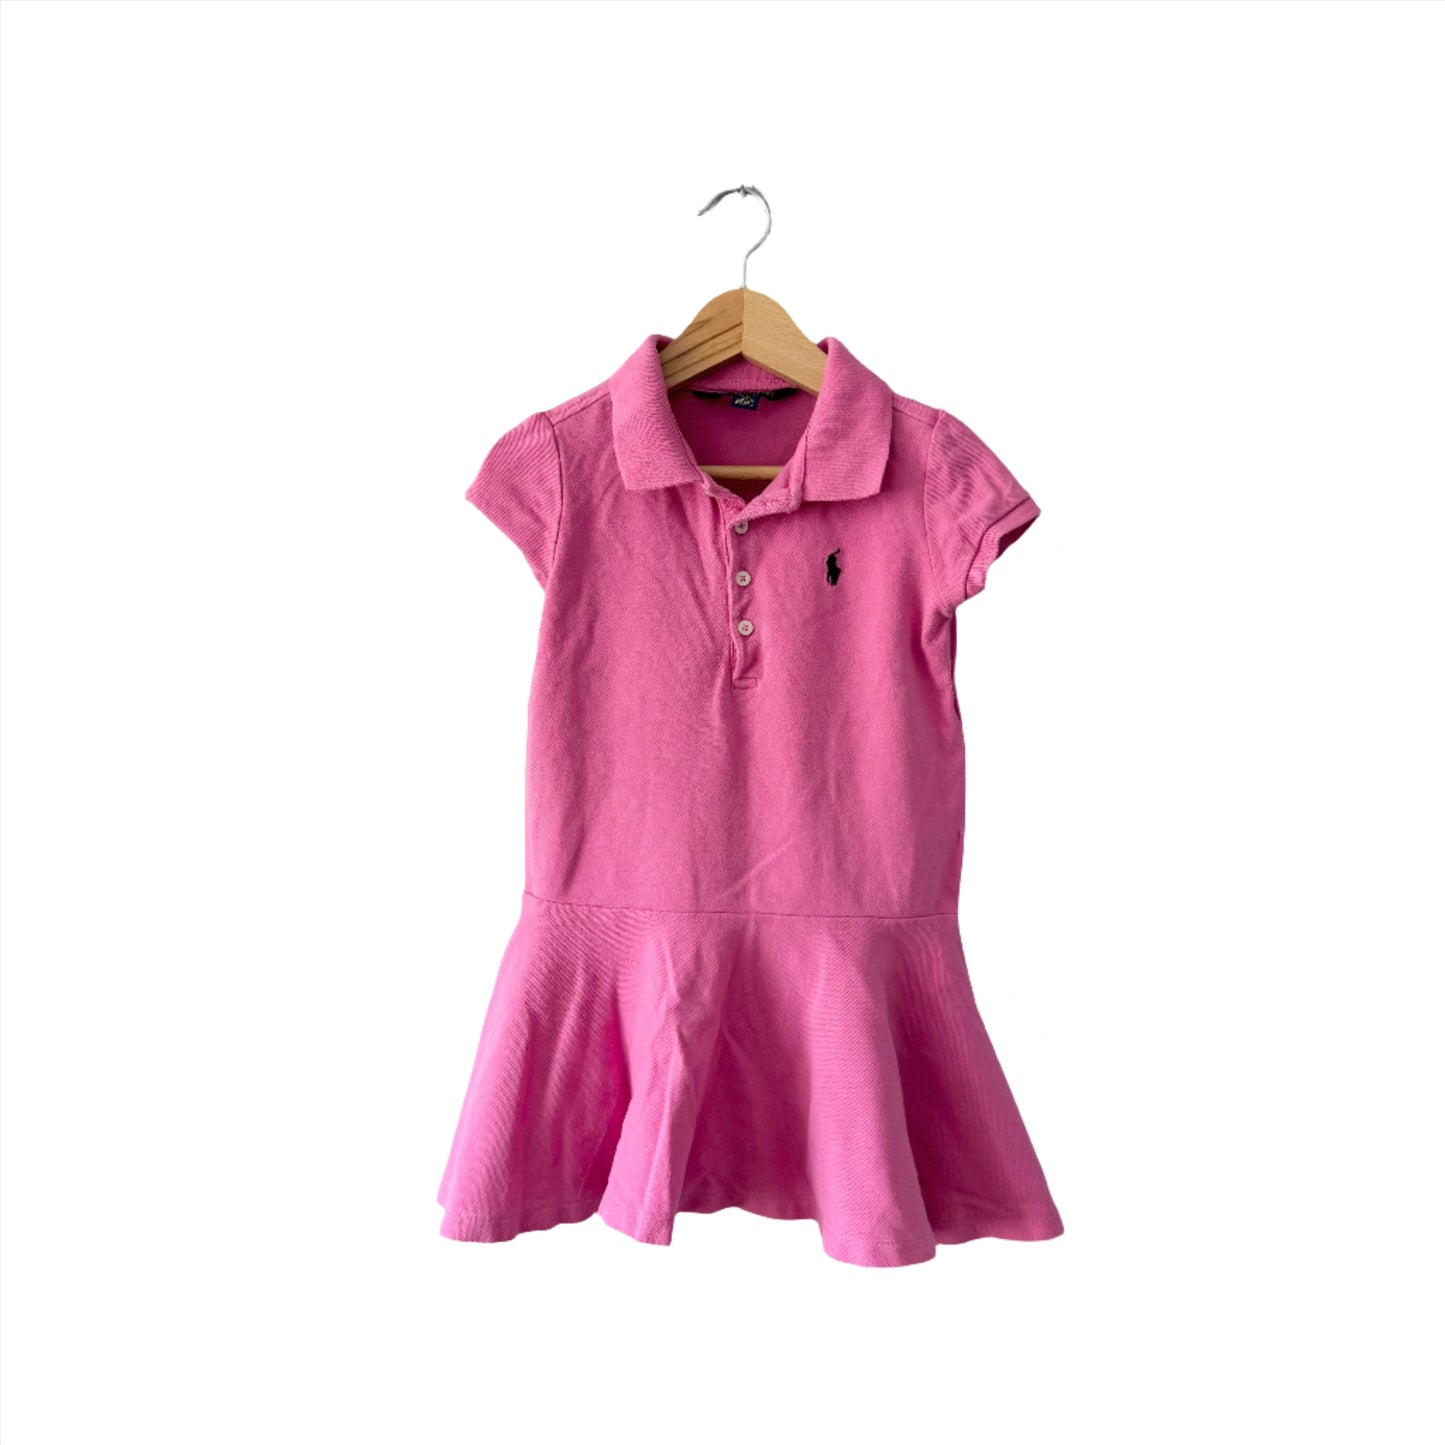 Polo Ralph Lauren / Pink polo dress / 3Y